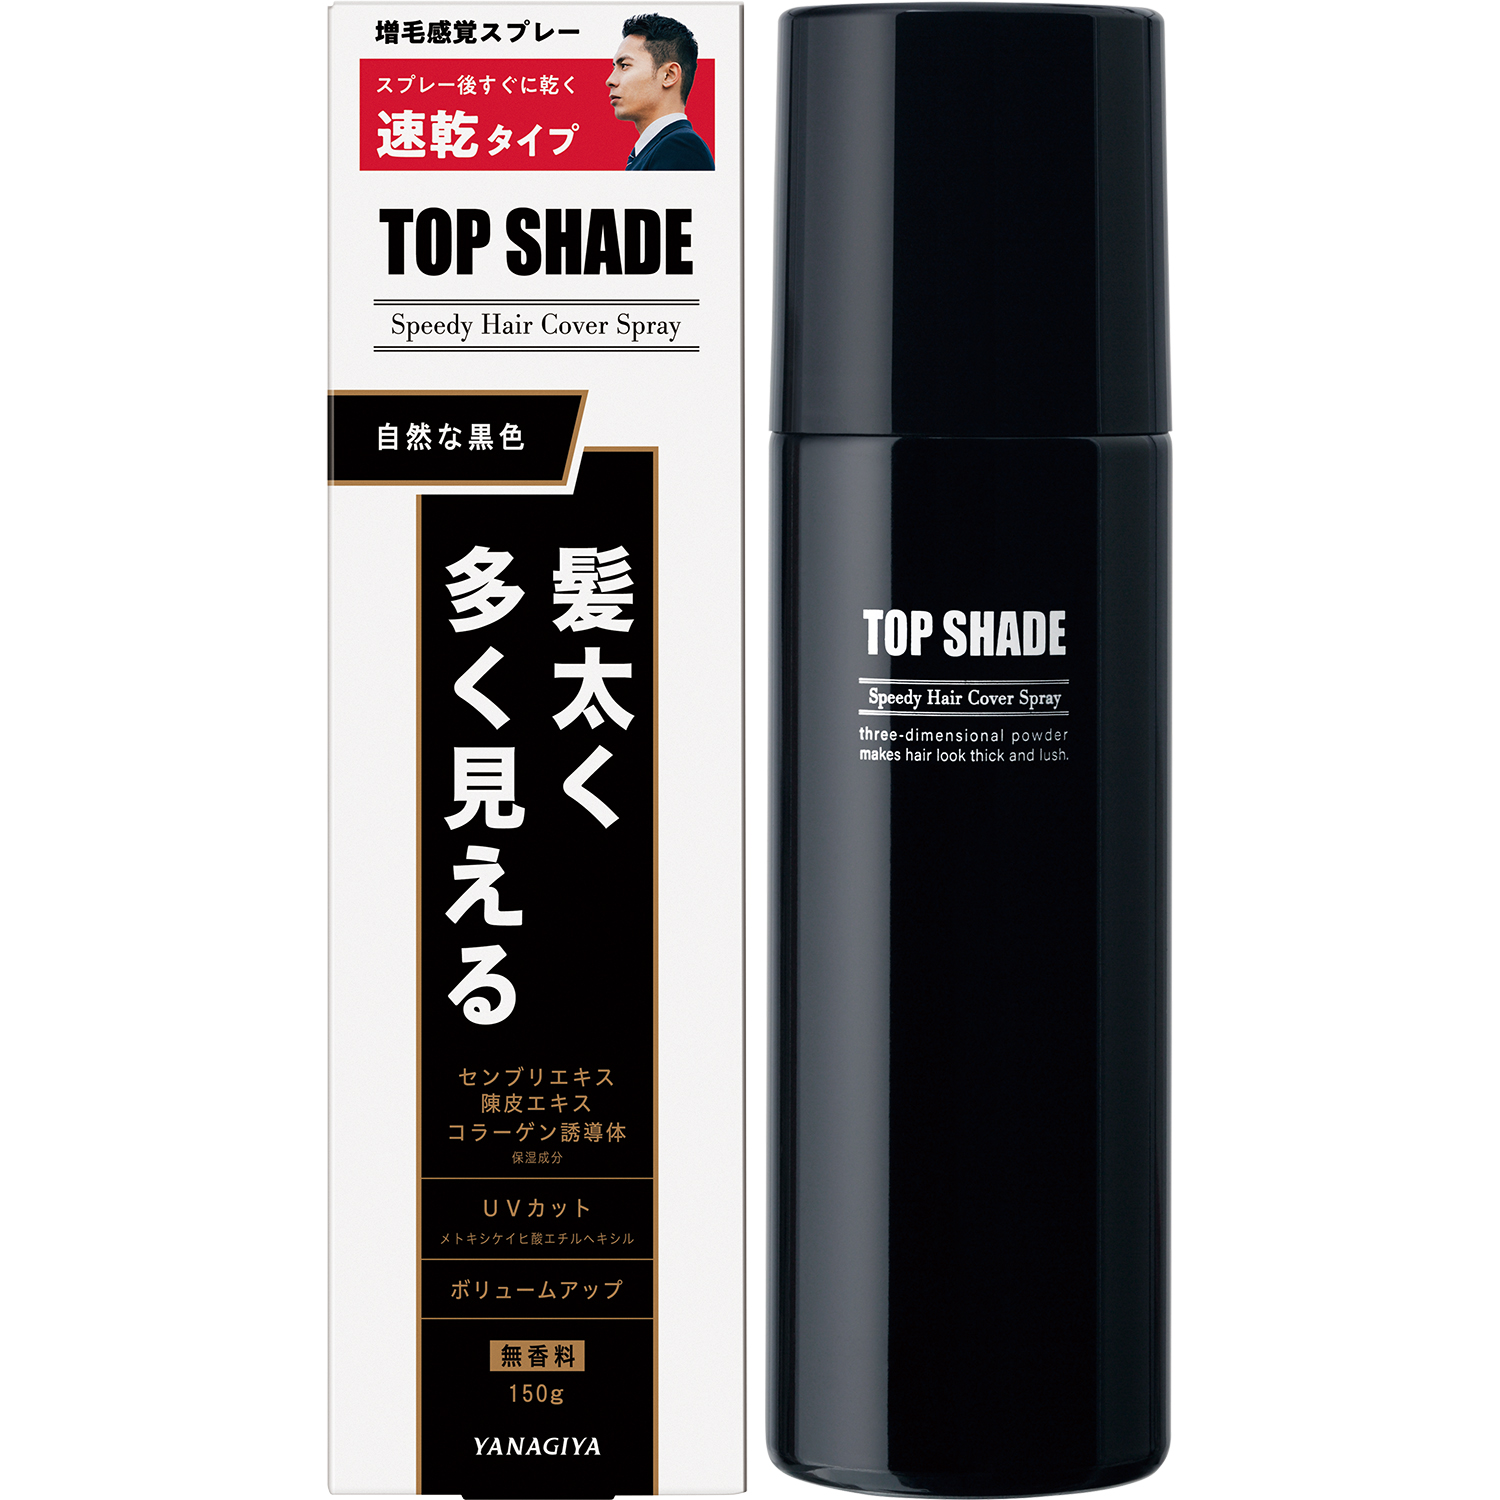 Top Shade Speedy Hair Cover Spray <Natural Black>